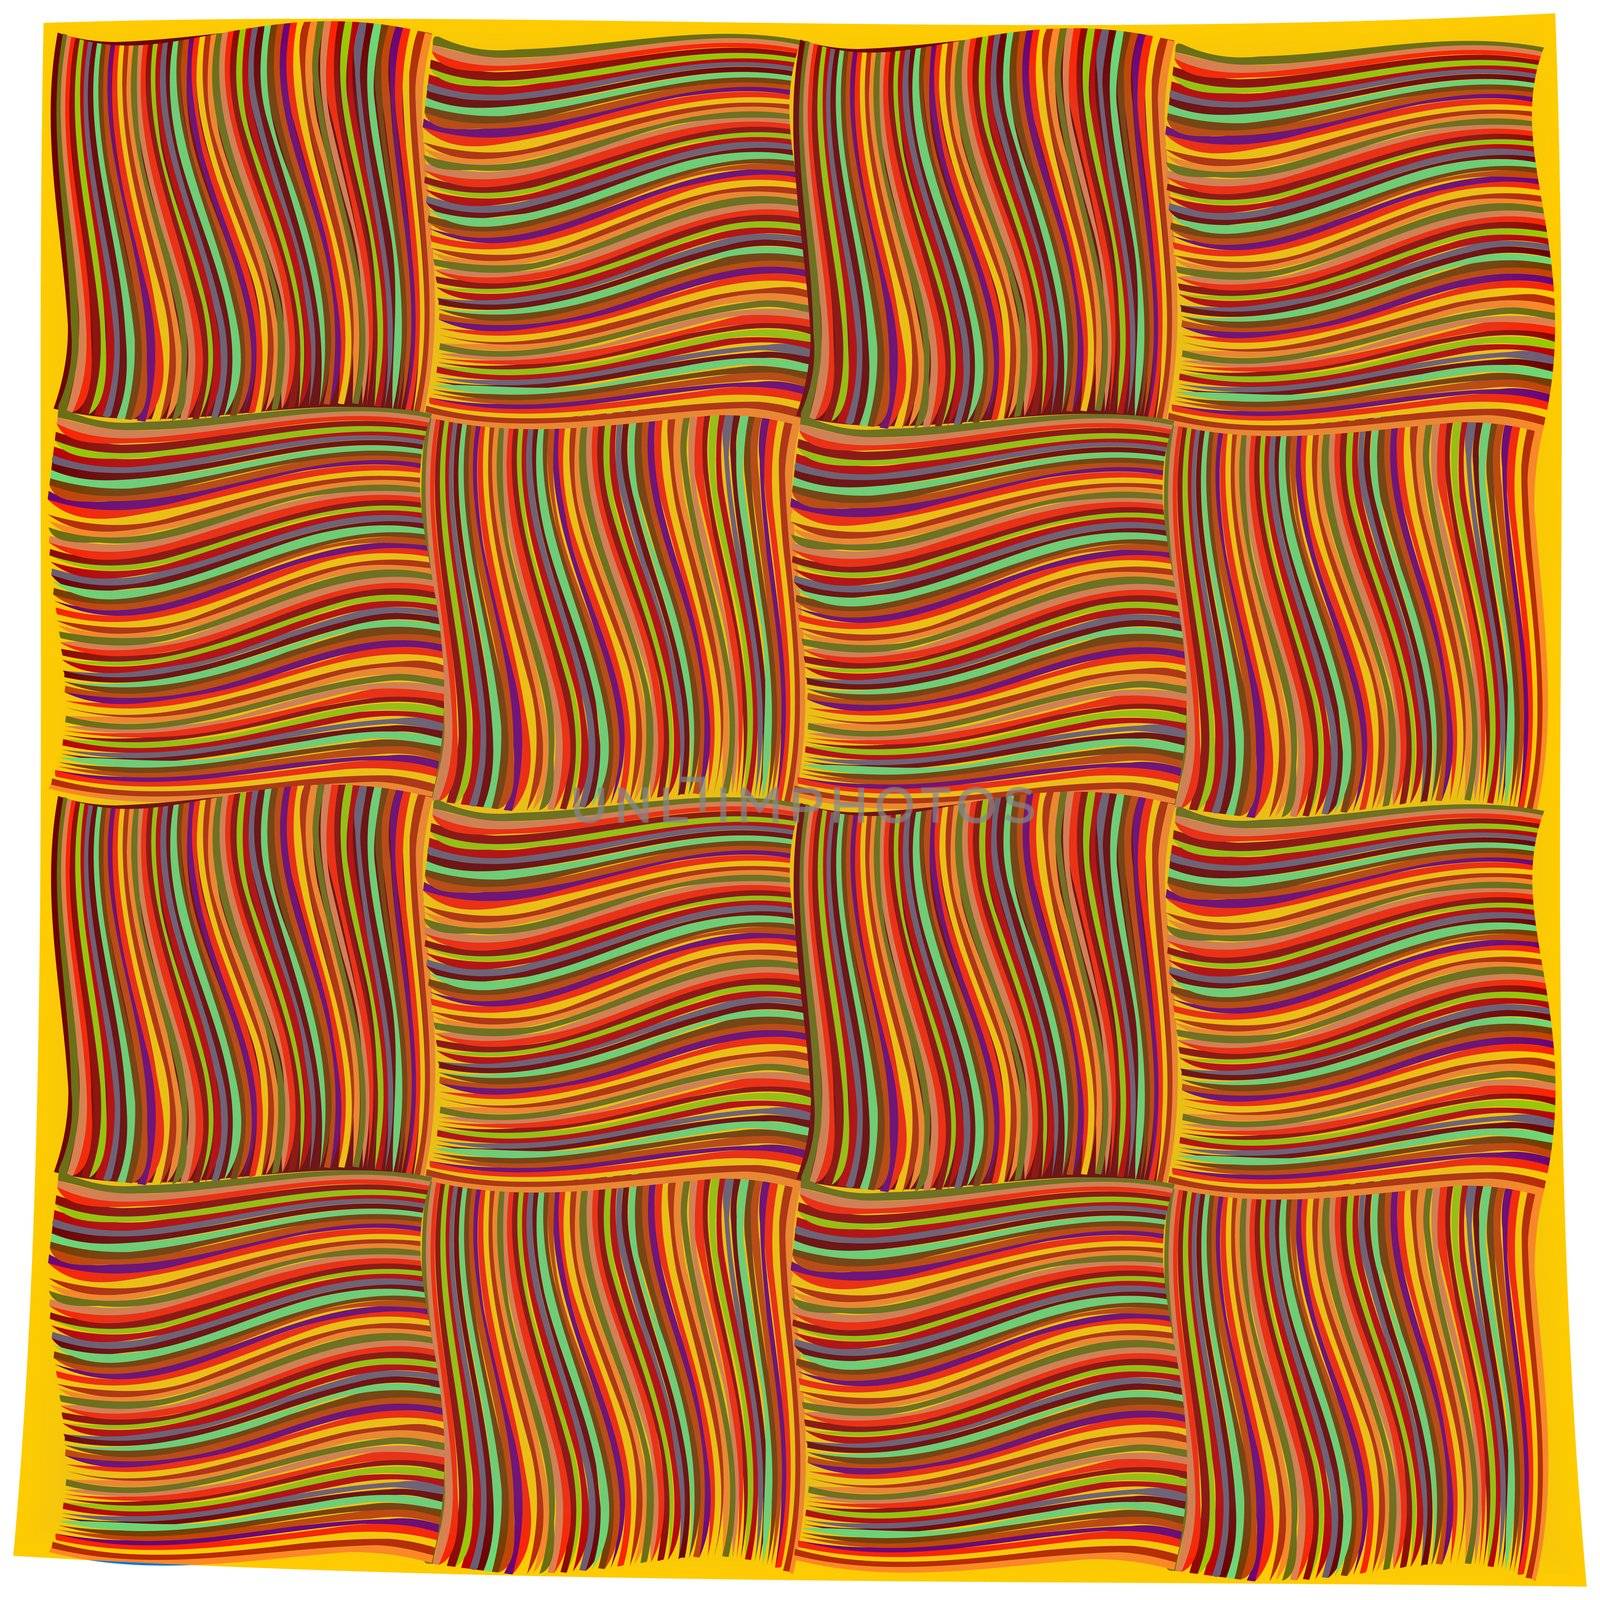 orange handkerchief against white background, abstract vector art illustration